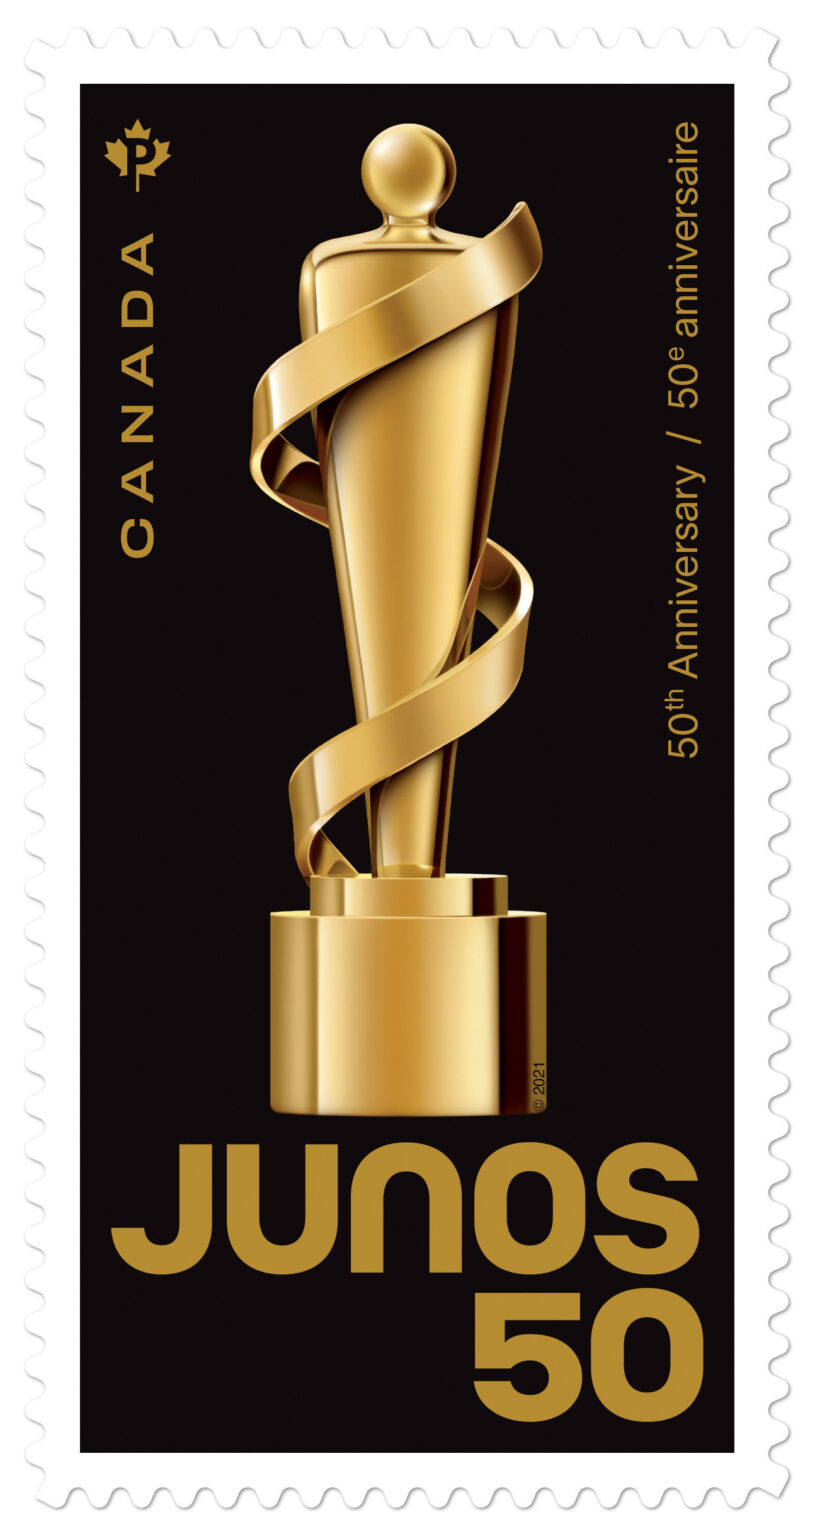 Canada Post celebrates the JUNO Awards' golden anniversary